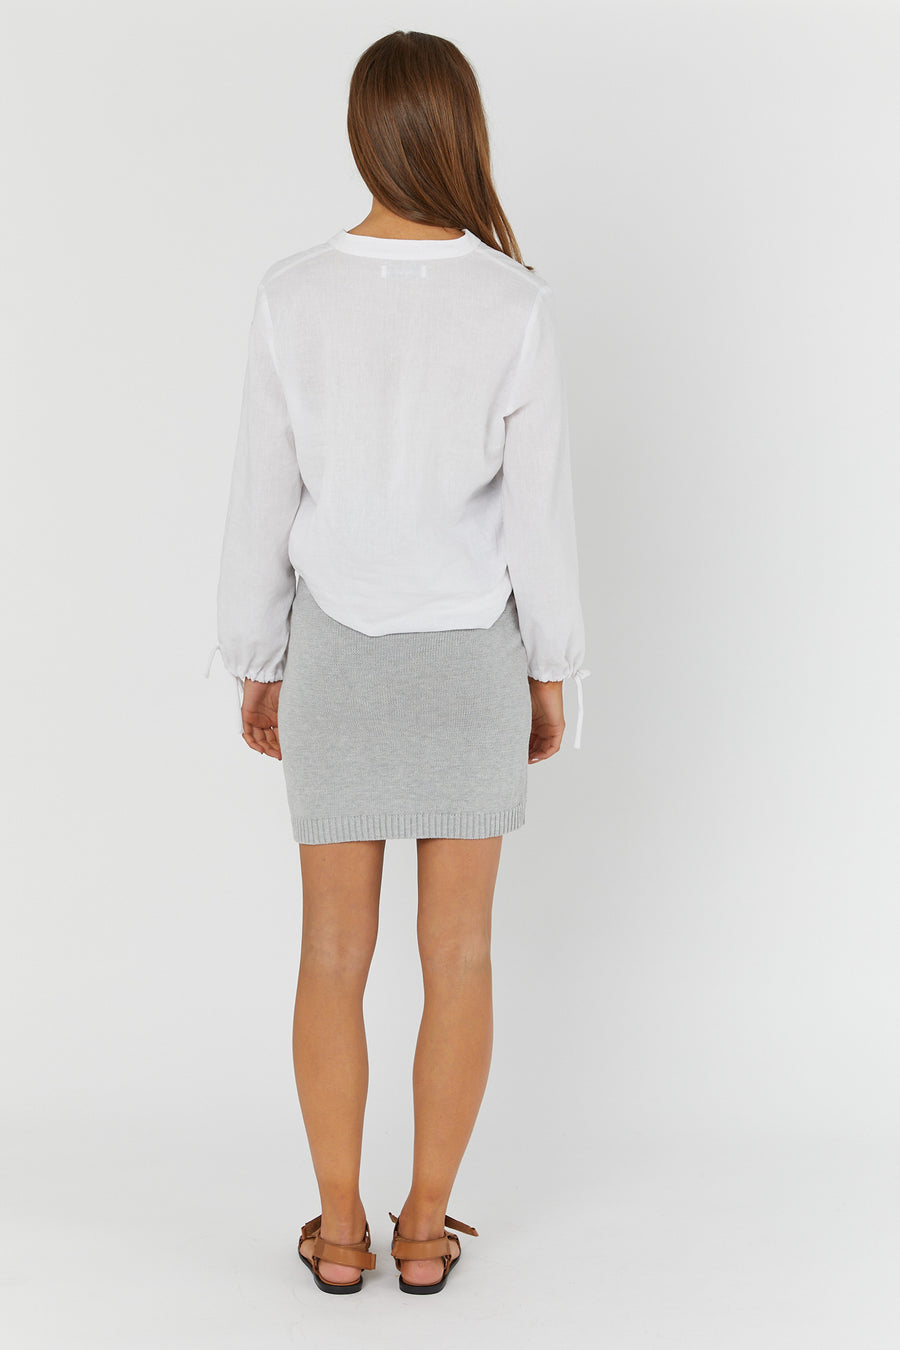 Knit Skirt (Silver Grey) - FINAL SALE